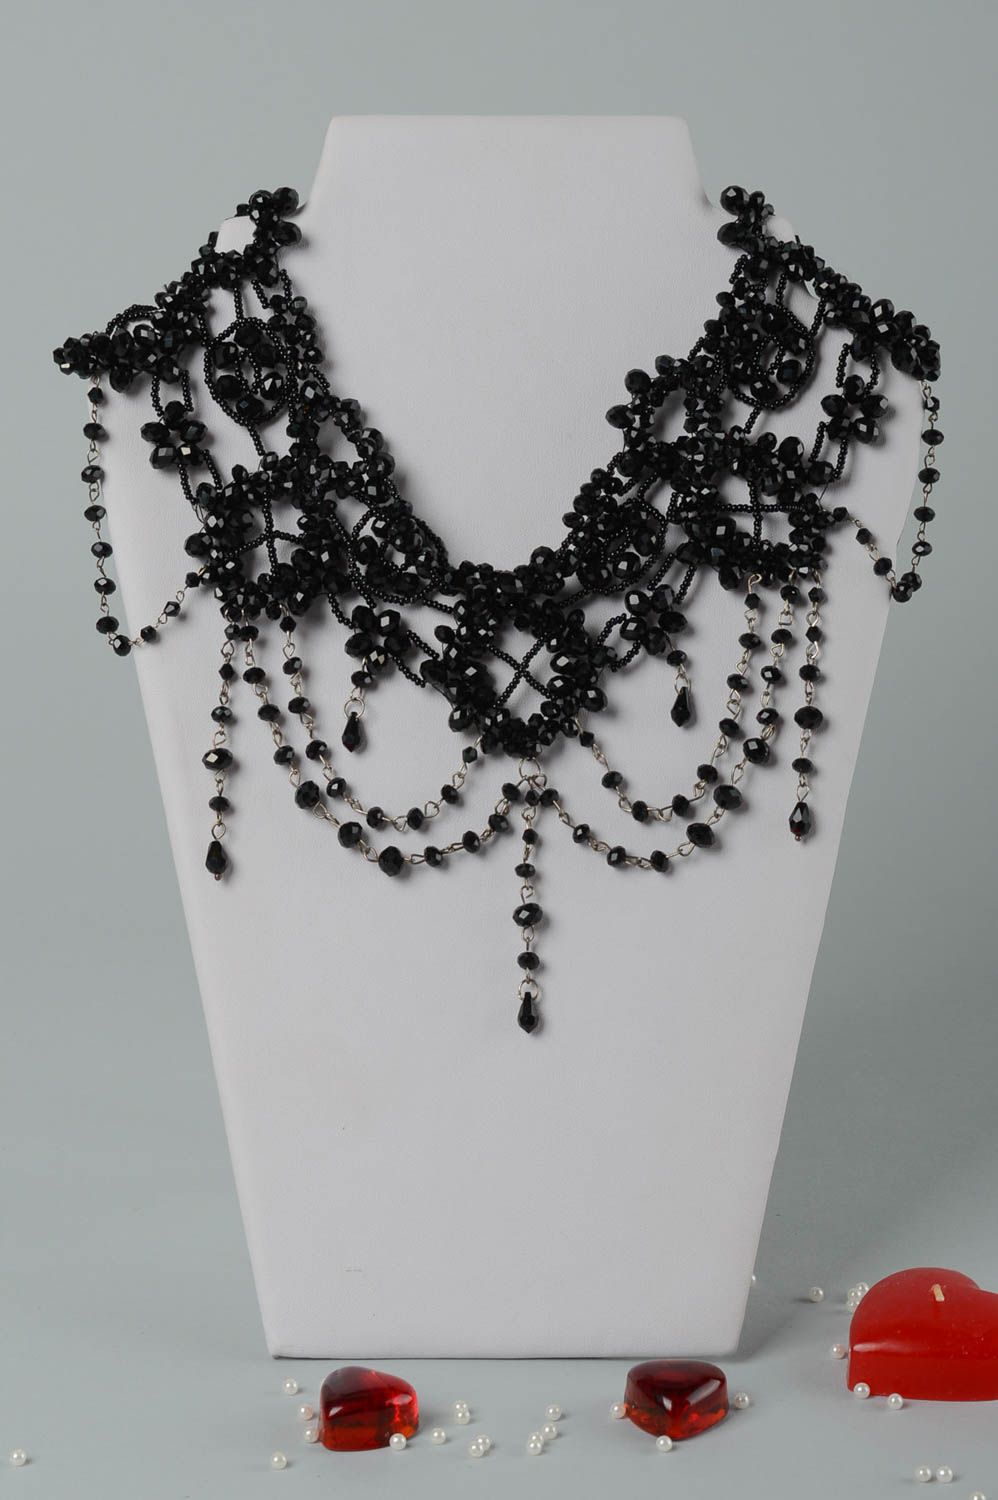 Unusual handmade beaded necklace fashion accessories artisan jewelry designs photo 1